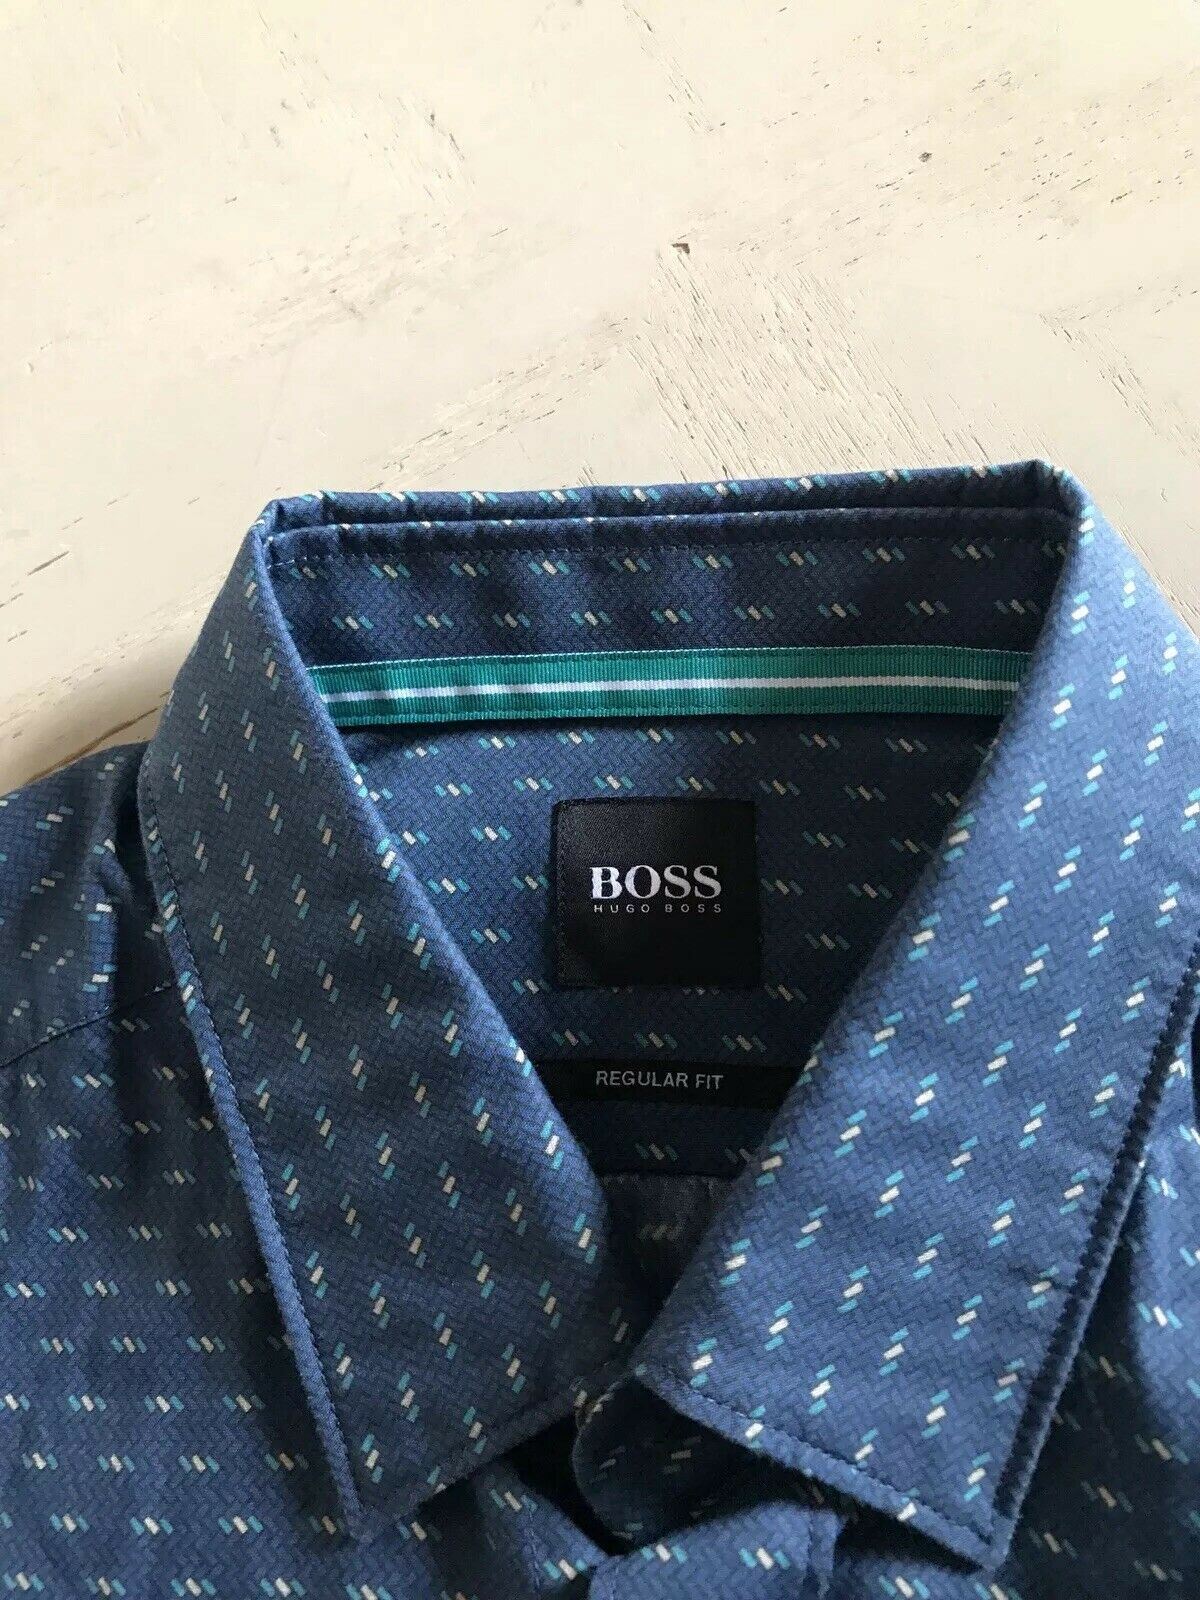 NWT $138 Hugo Boss Mens Cotton Blue Dress Shirt Size S